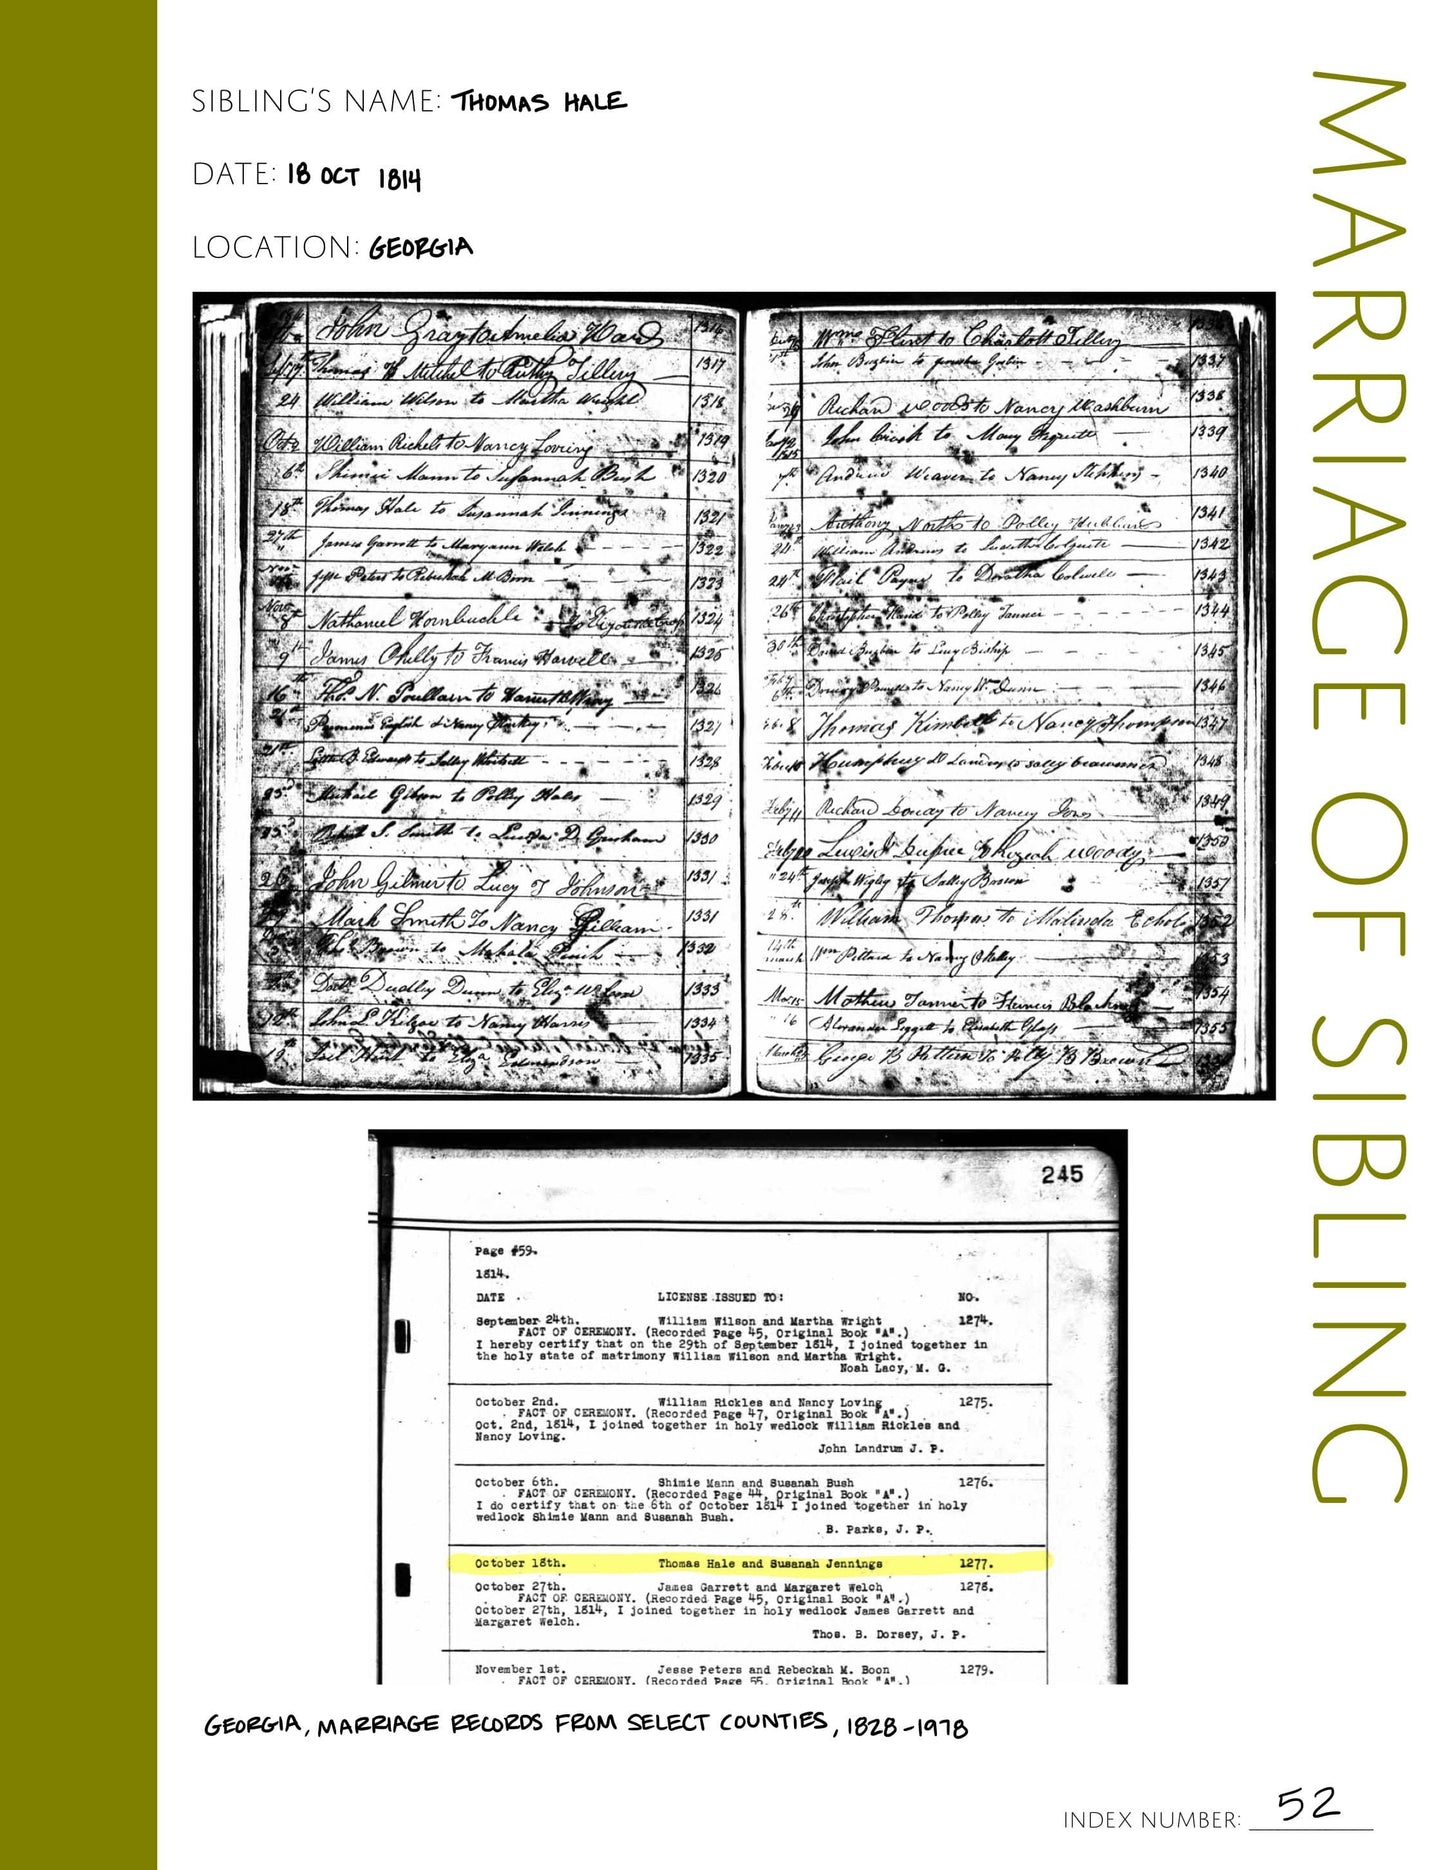 Marriage of Sibling: Printable Genealogy Form (Digital Download)